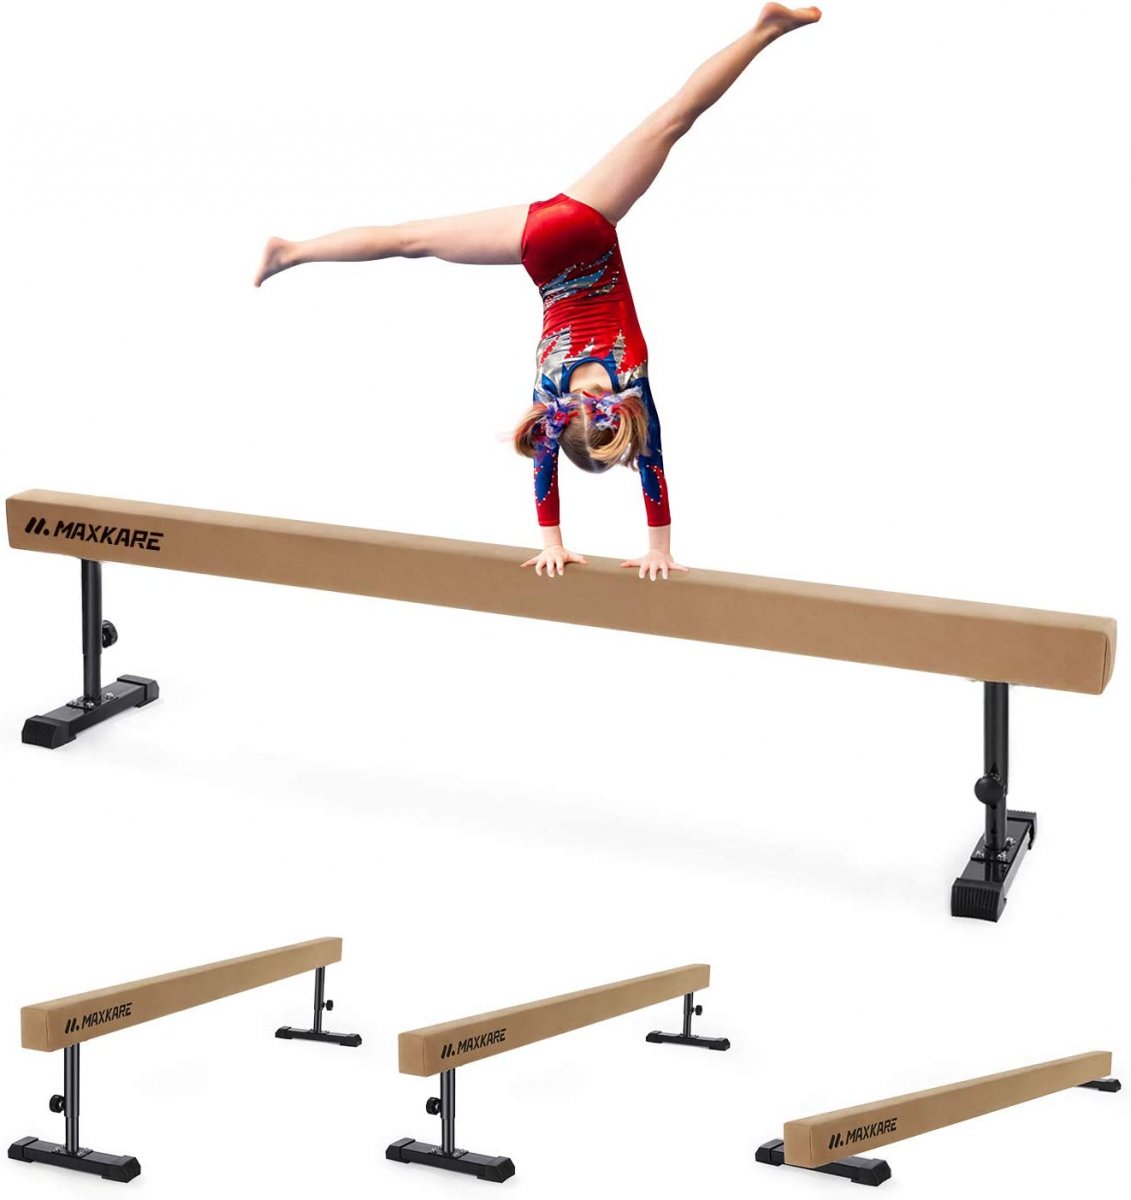 Gymnastics Beam 8ft